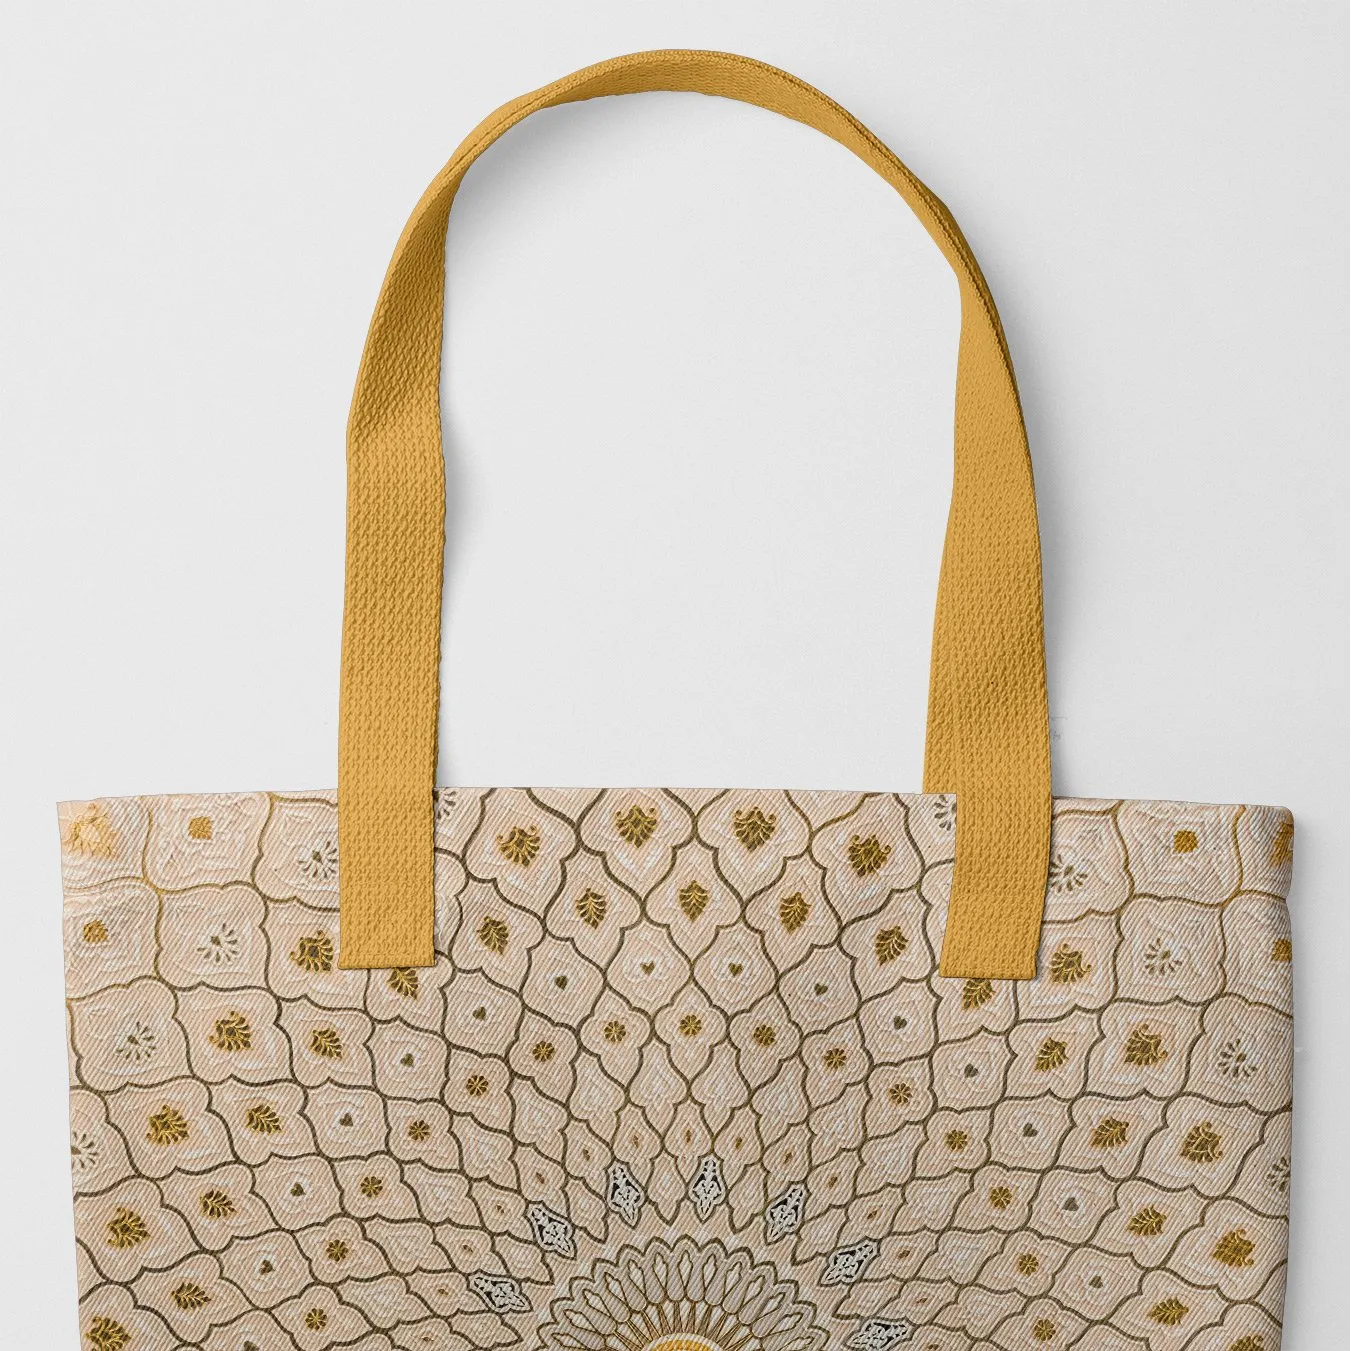 Divine Order - Islamic Geometric Pattern Tote - Yellow Handles - Tote Bags - Aesthetic Art